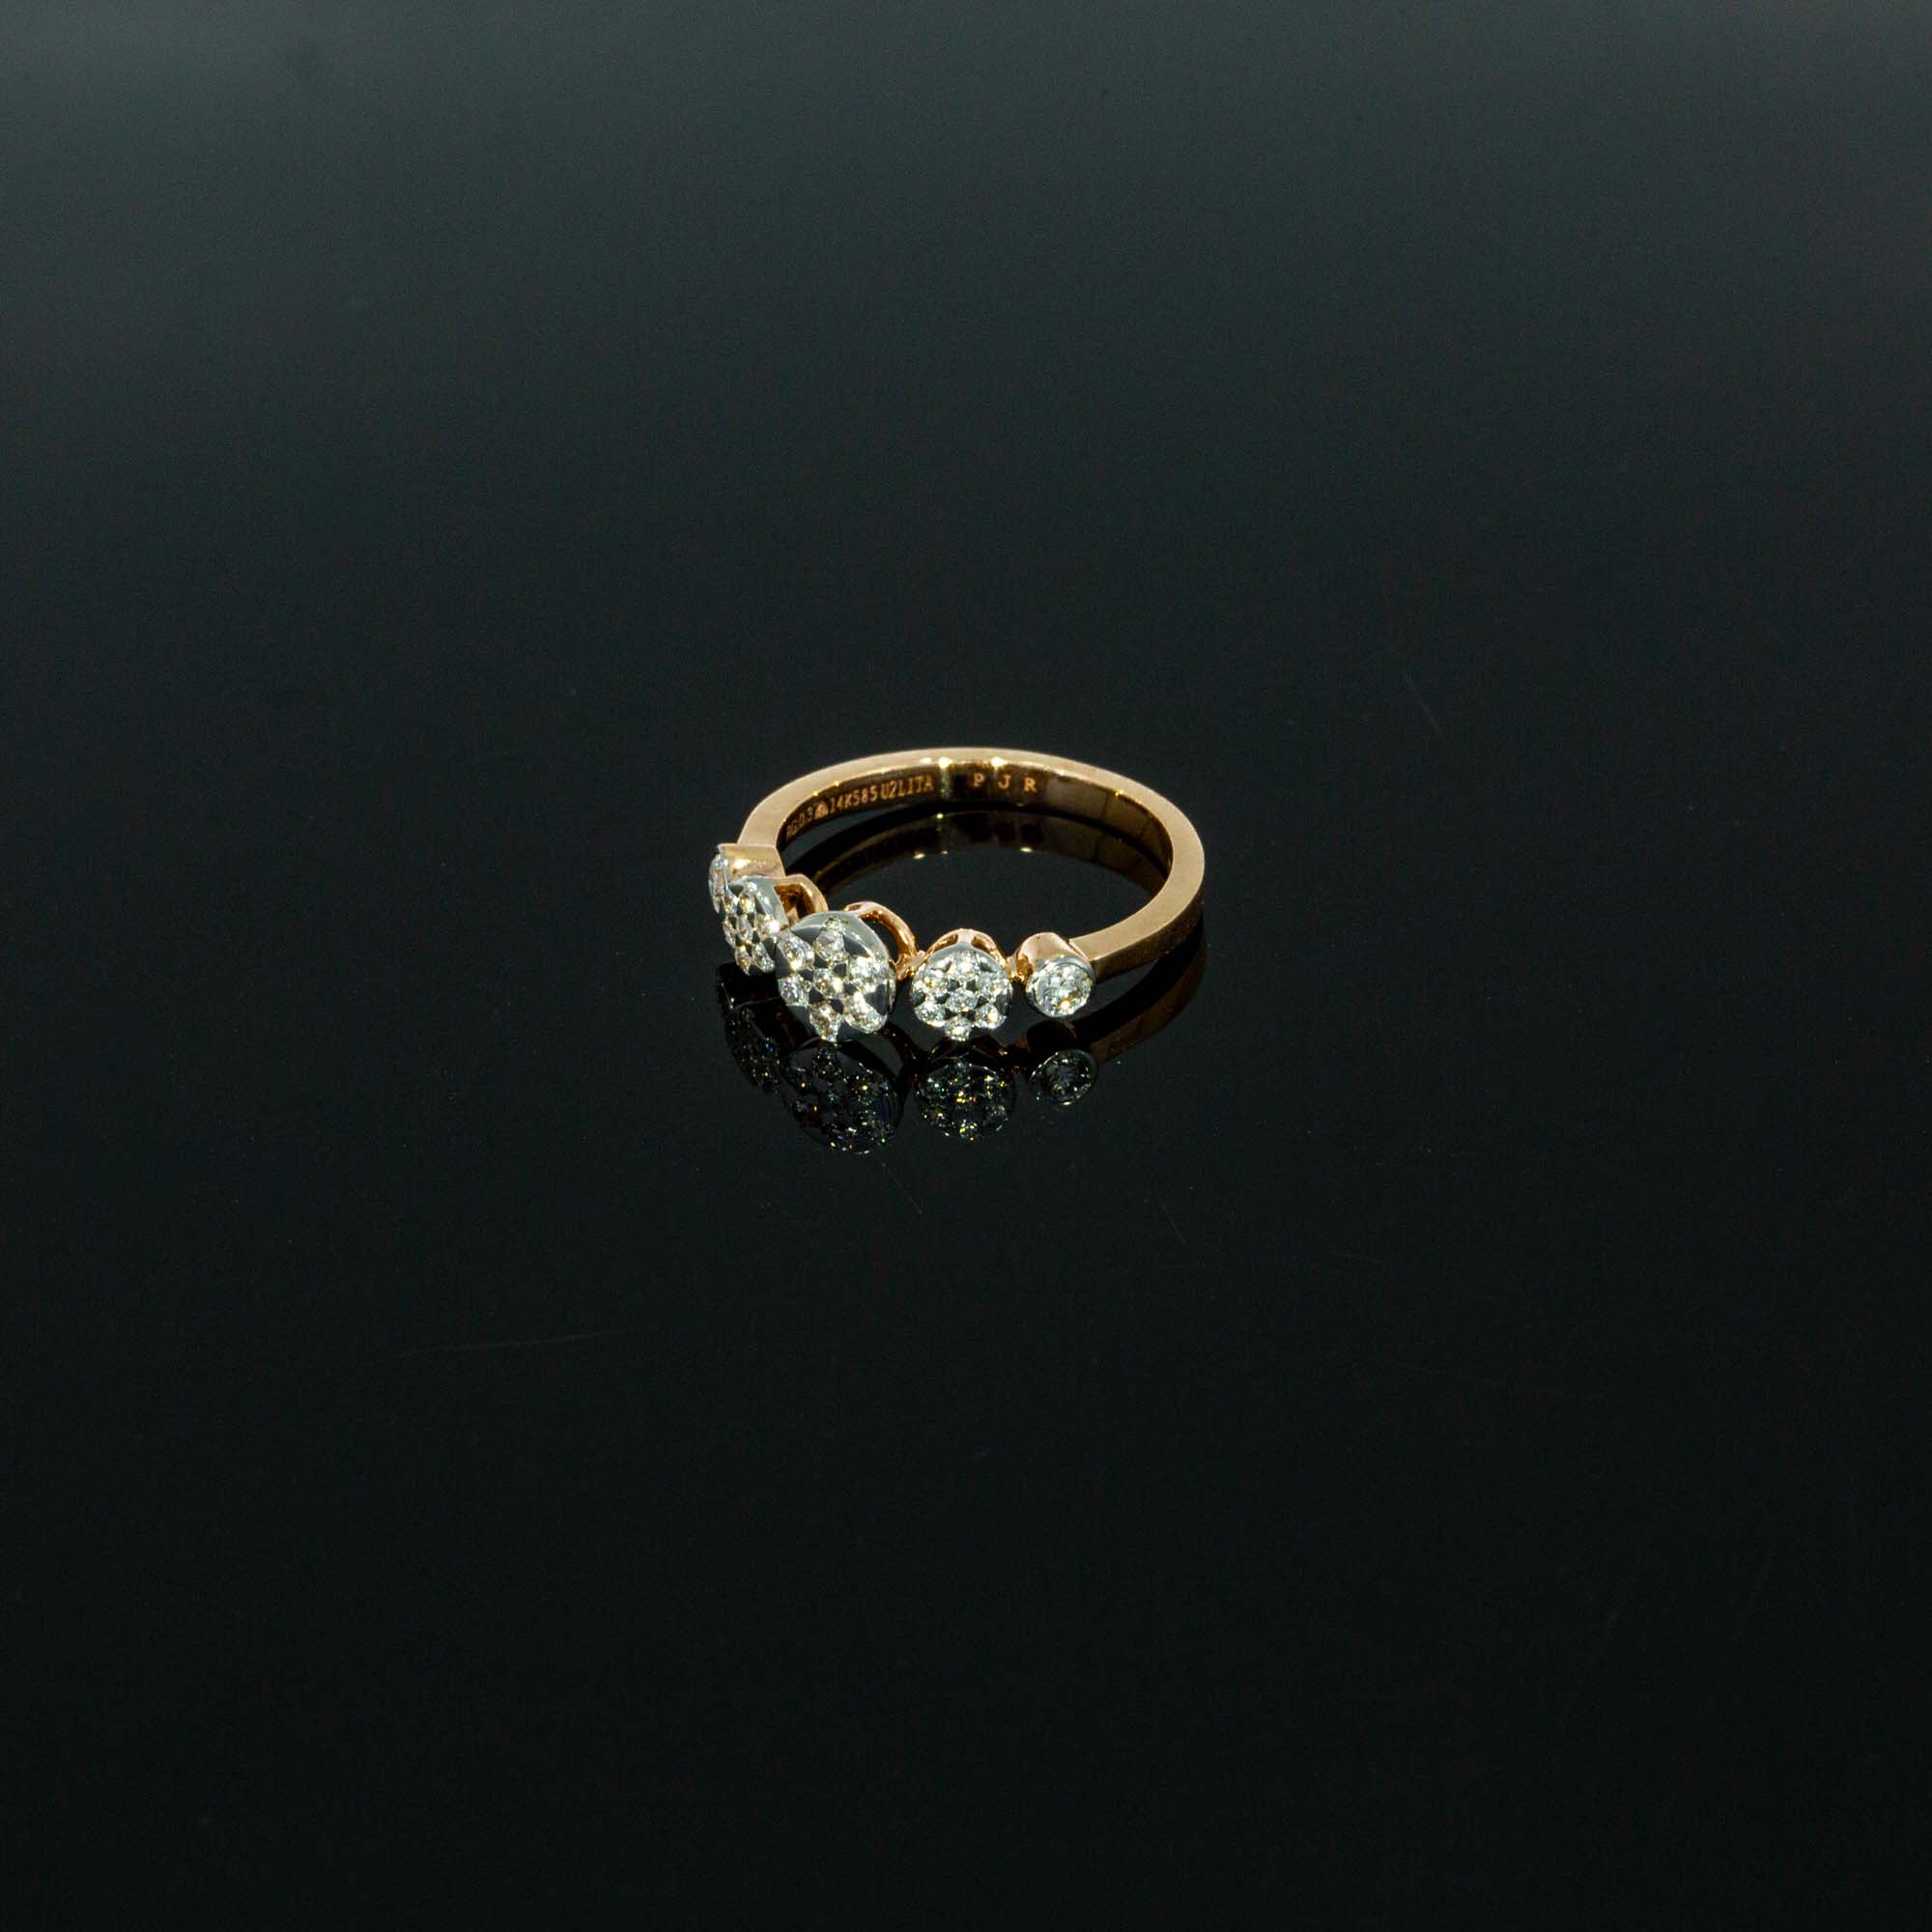 Buy Couple Diamond Rings Design With Price Online - Vaibhav Jewellers